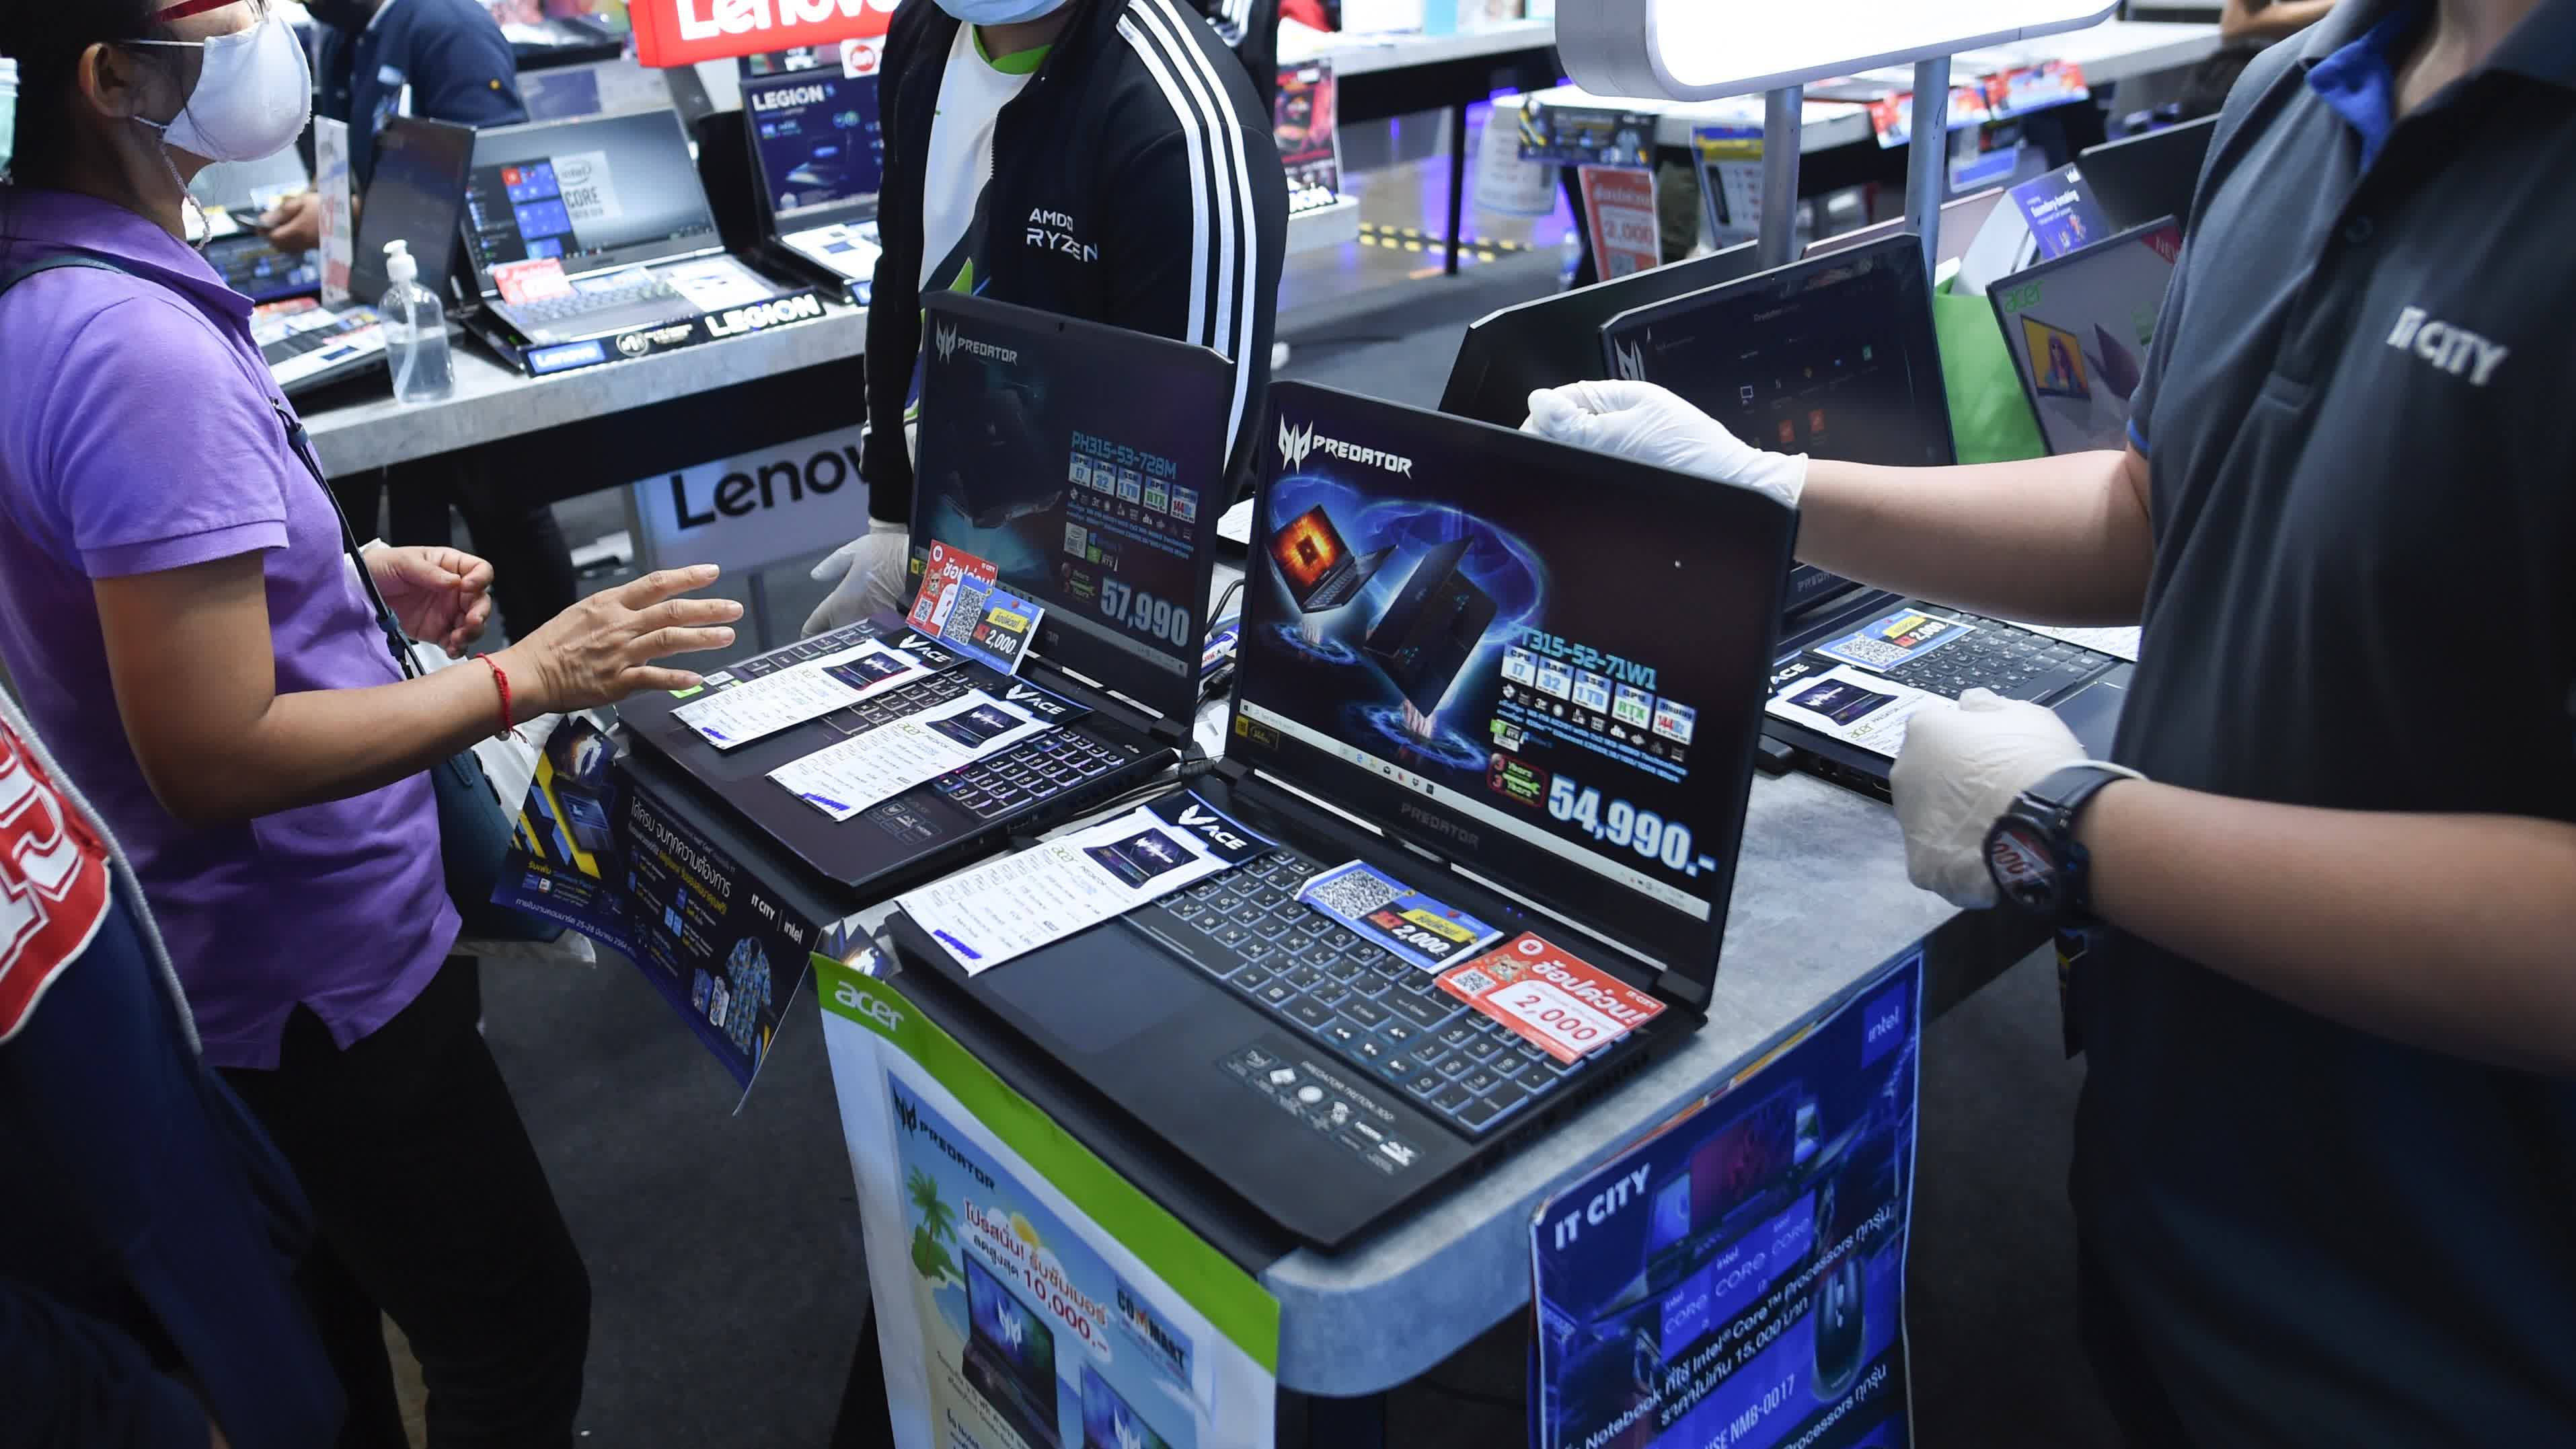 Global PC market sees 15 percent revenue boost despite notebook shipment downturn